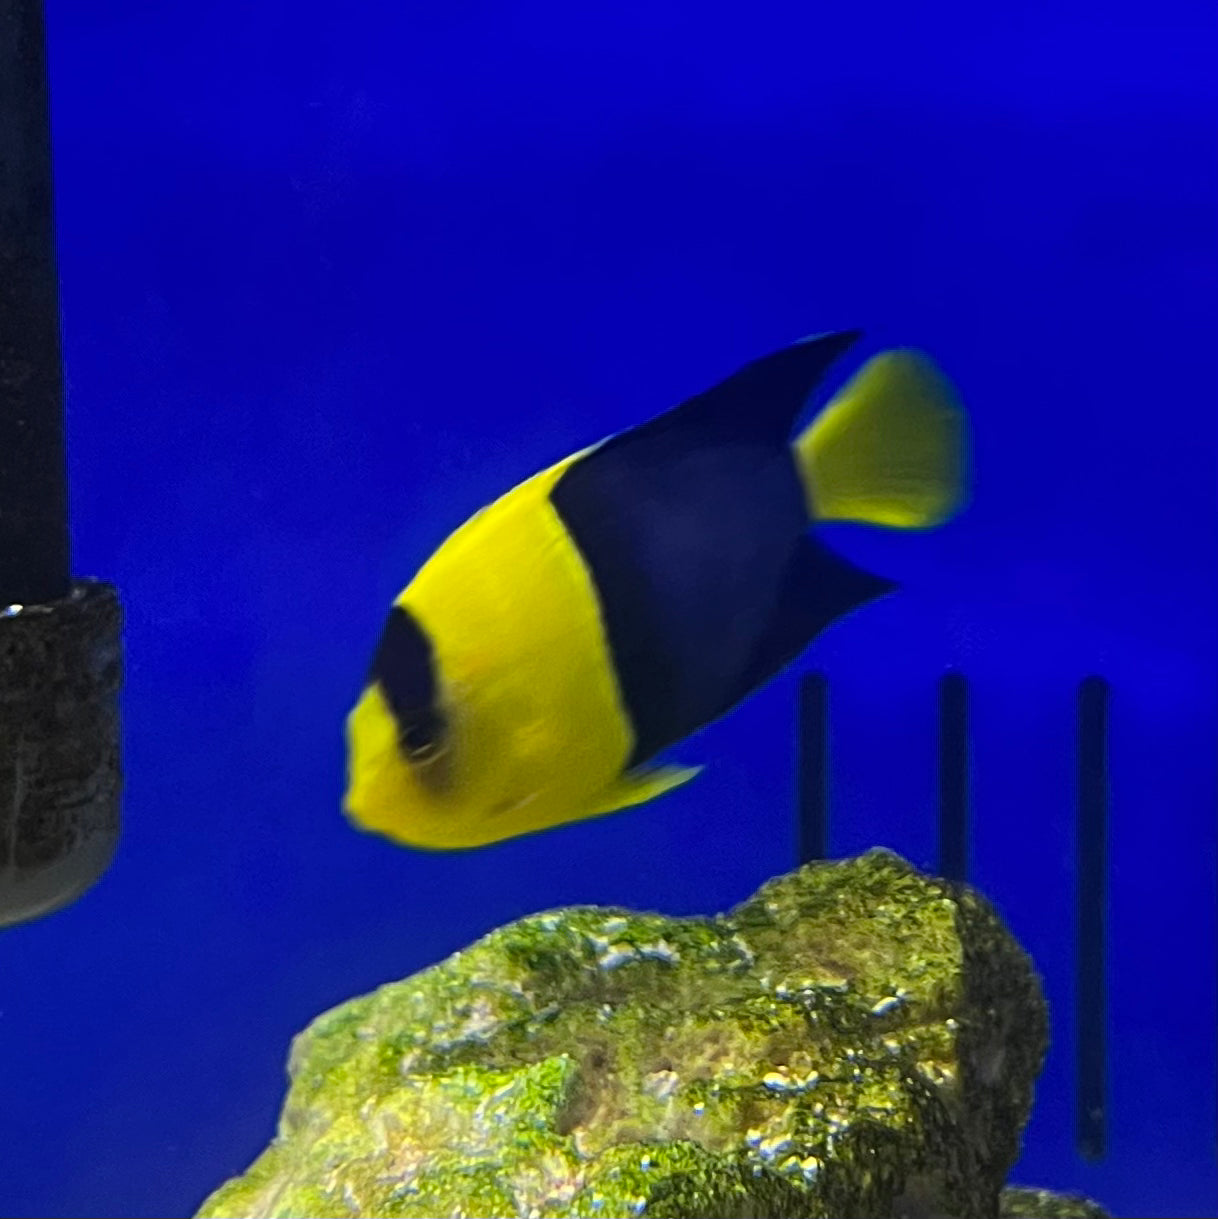 Bicolor Angelfish - Koral King